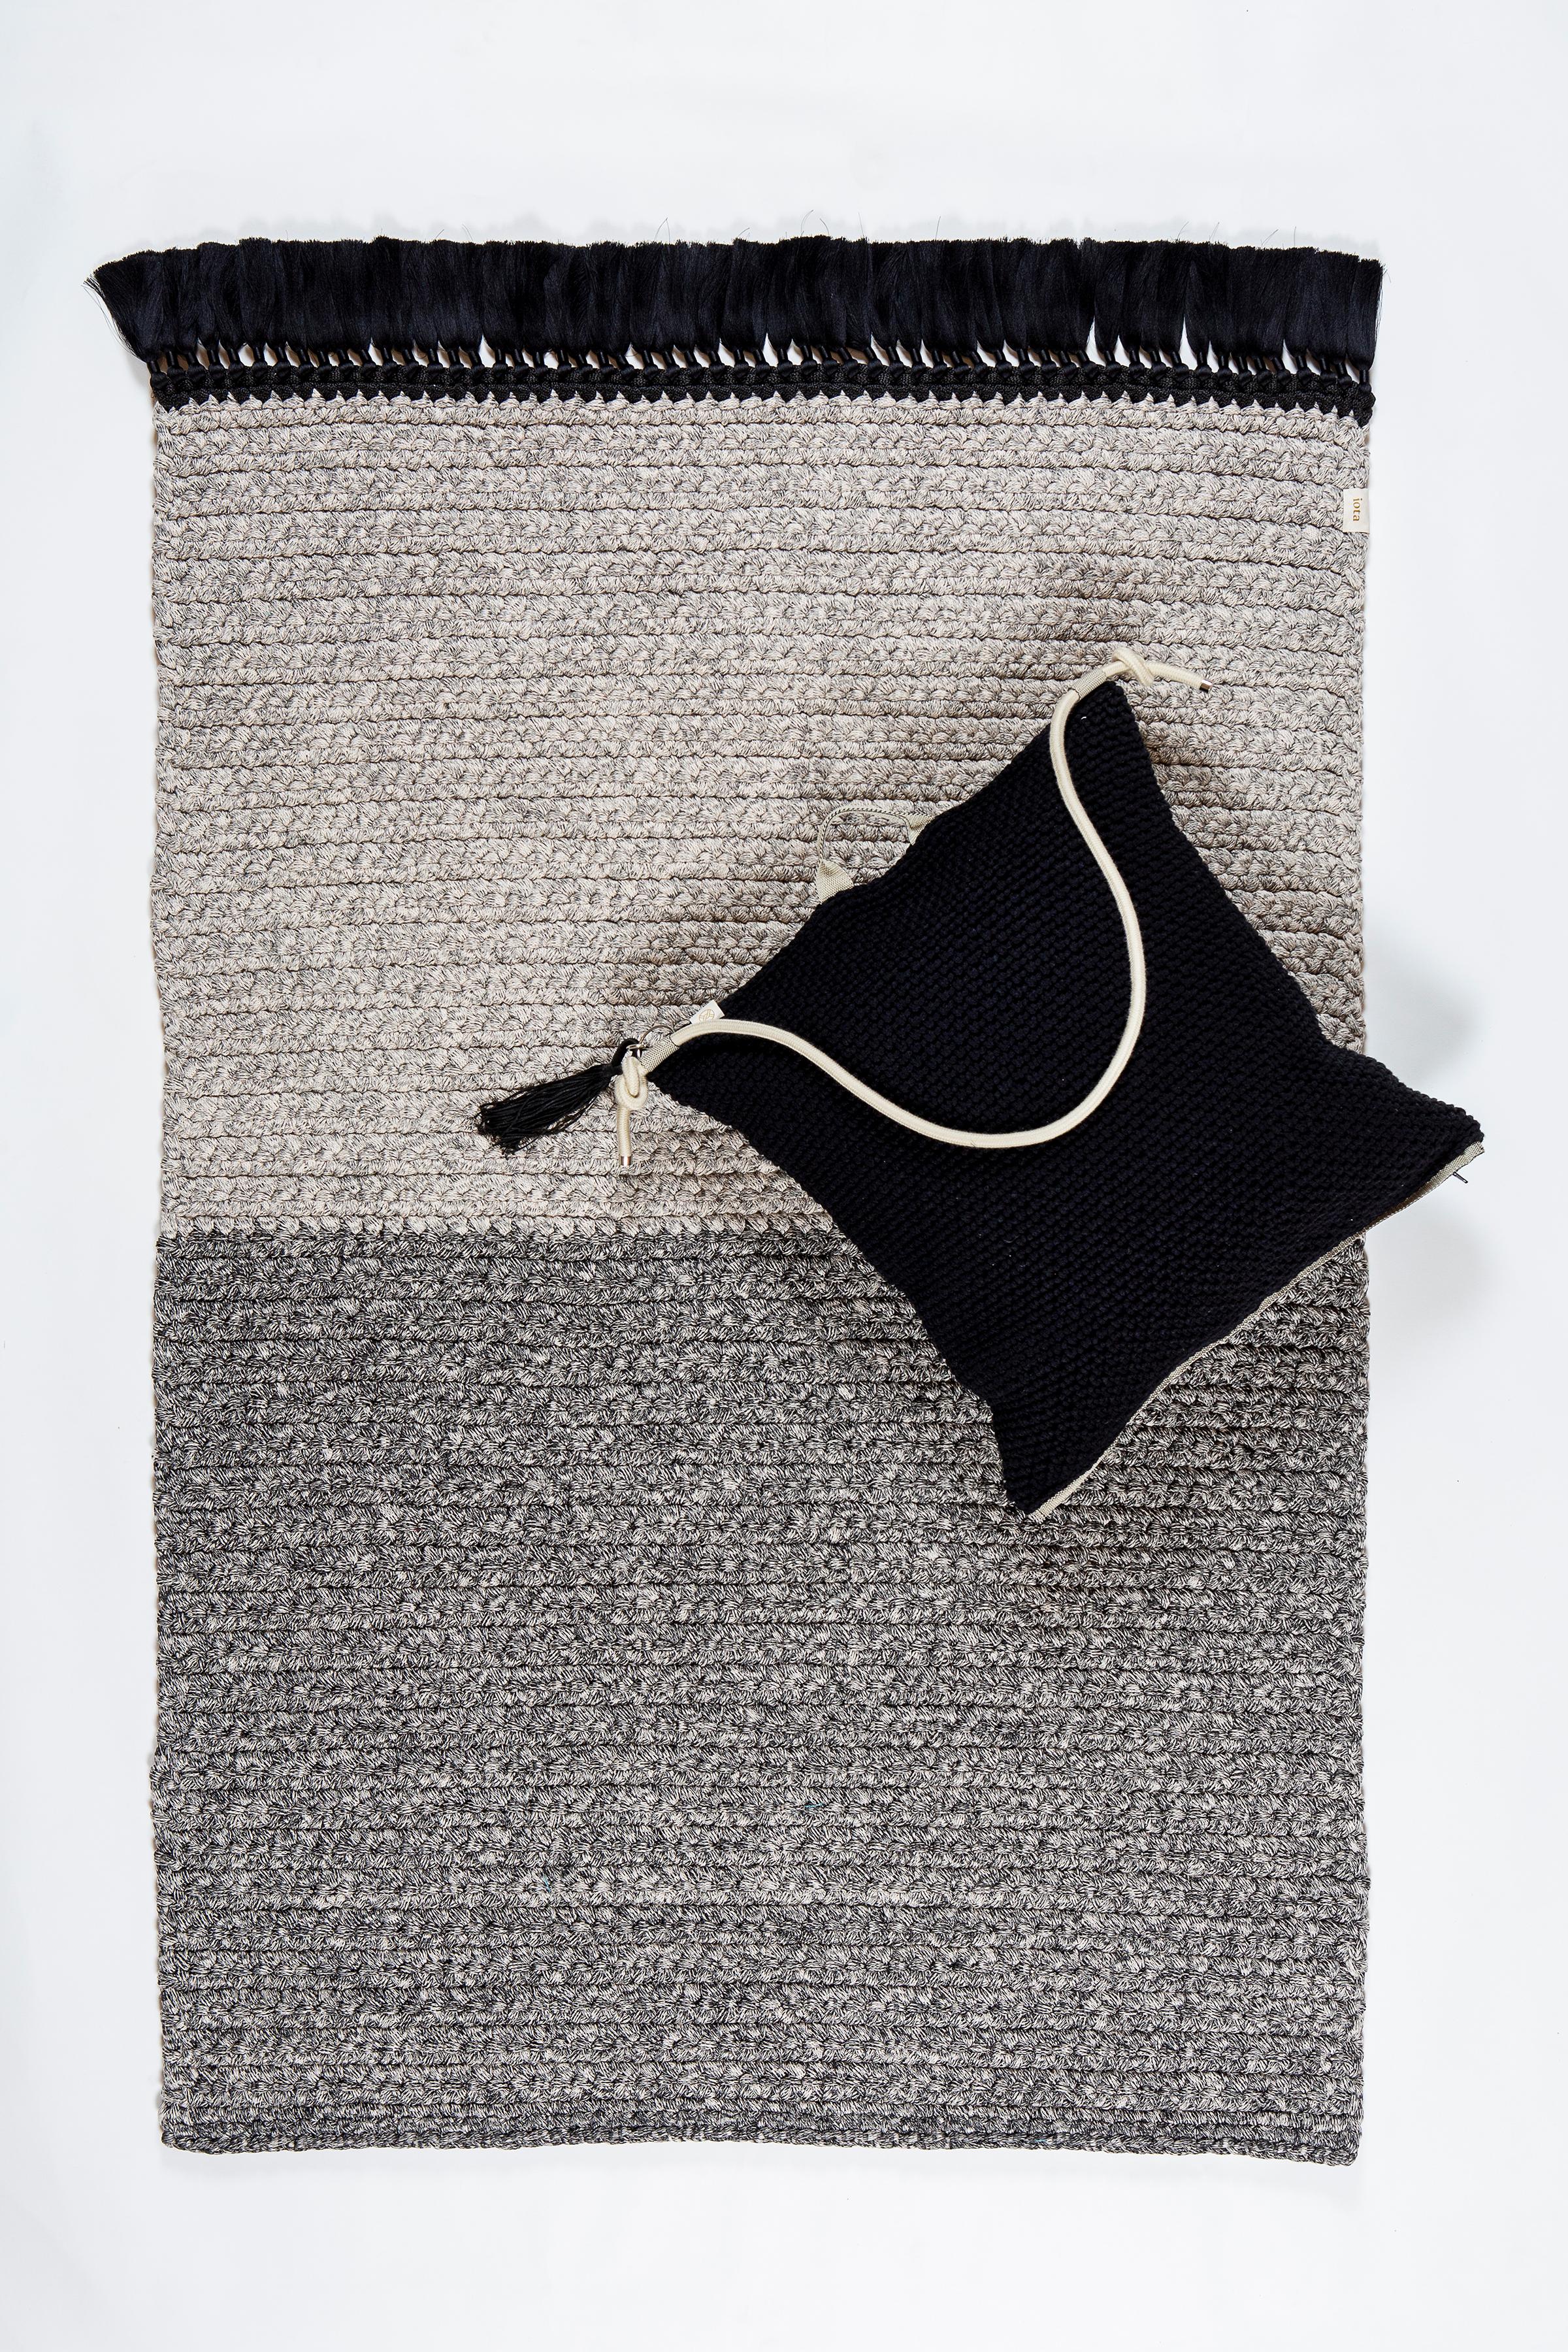 Handmade Crochet Two-Tone Rug in Black made of iota's Bespoke Yarns 3